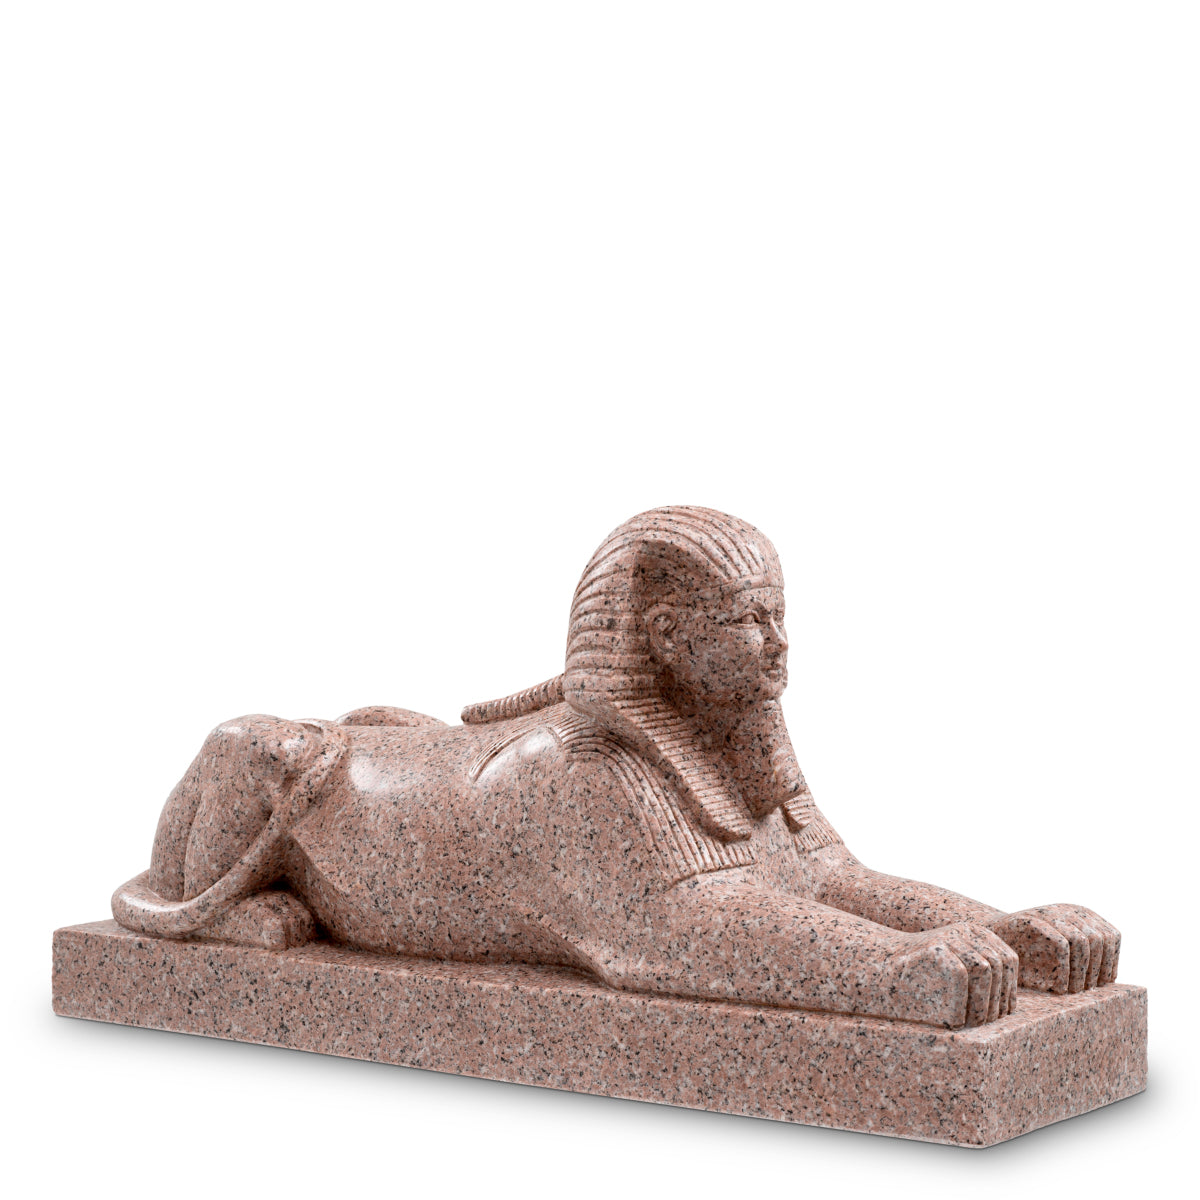 Object Sphinx Hatshepsut